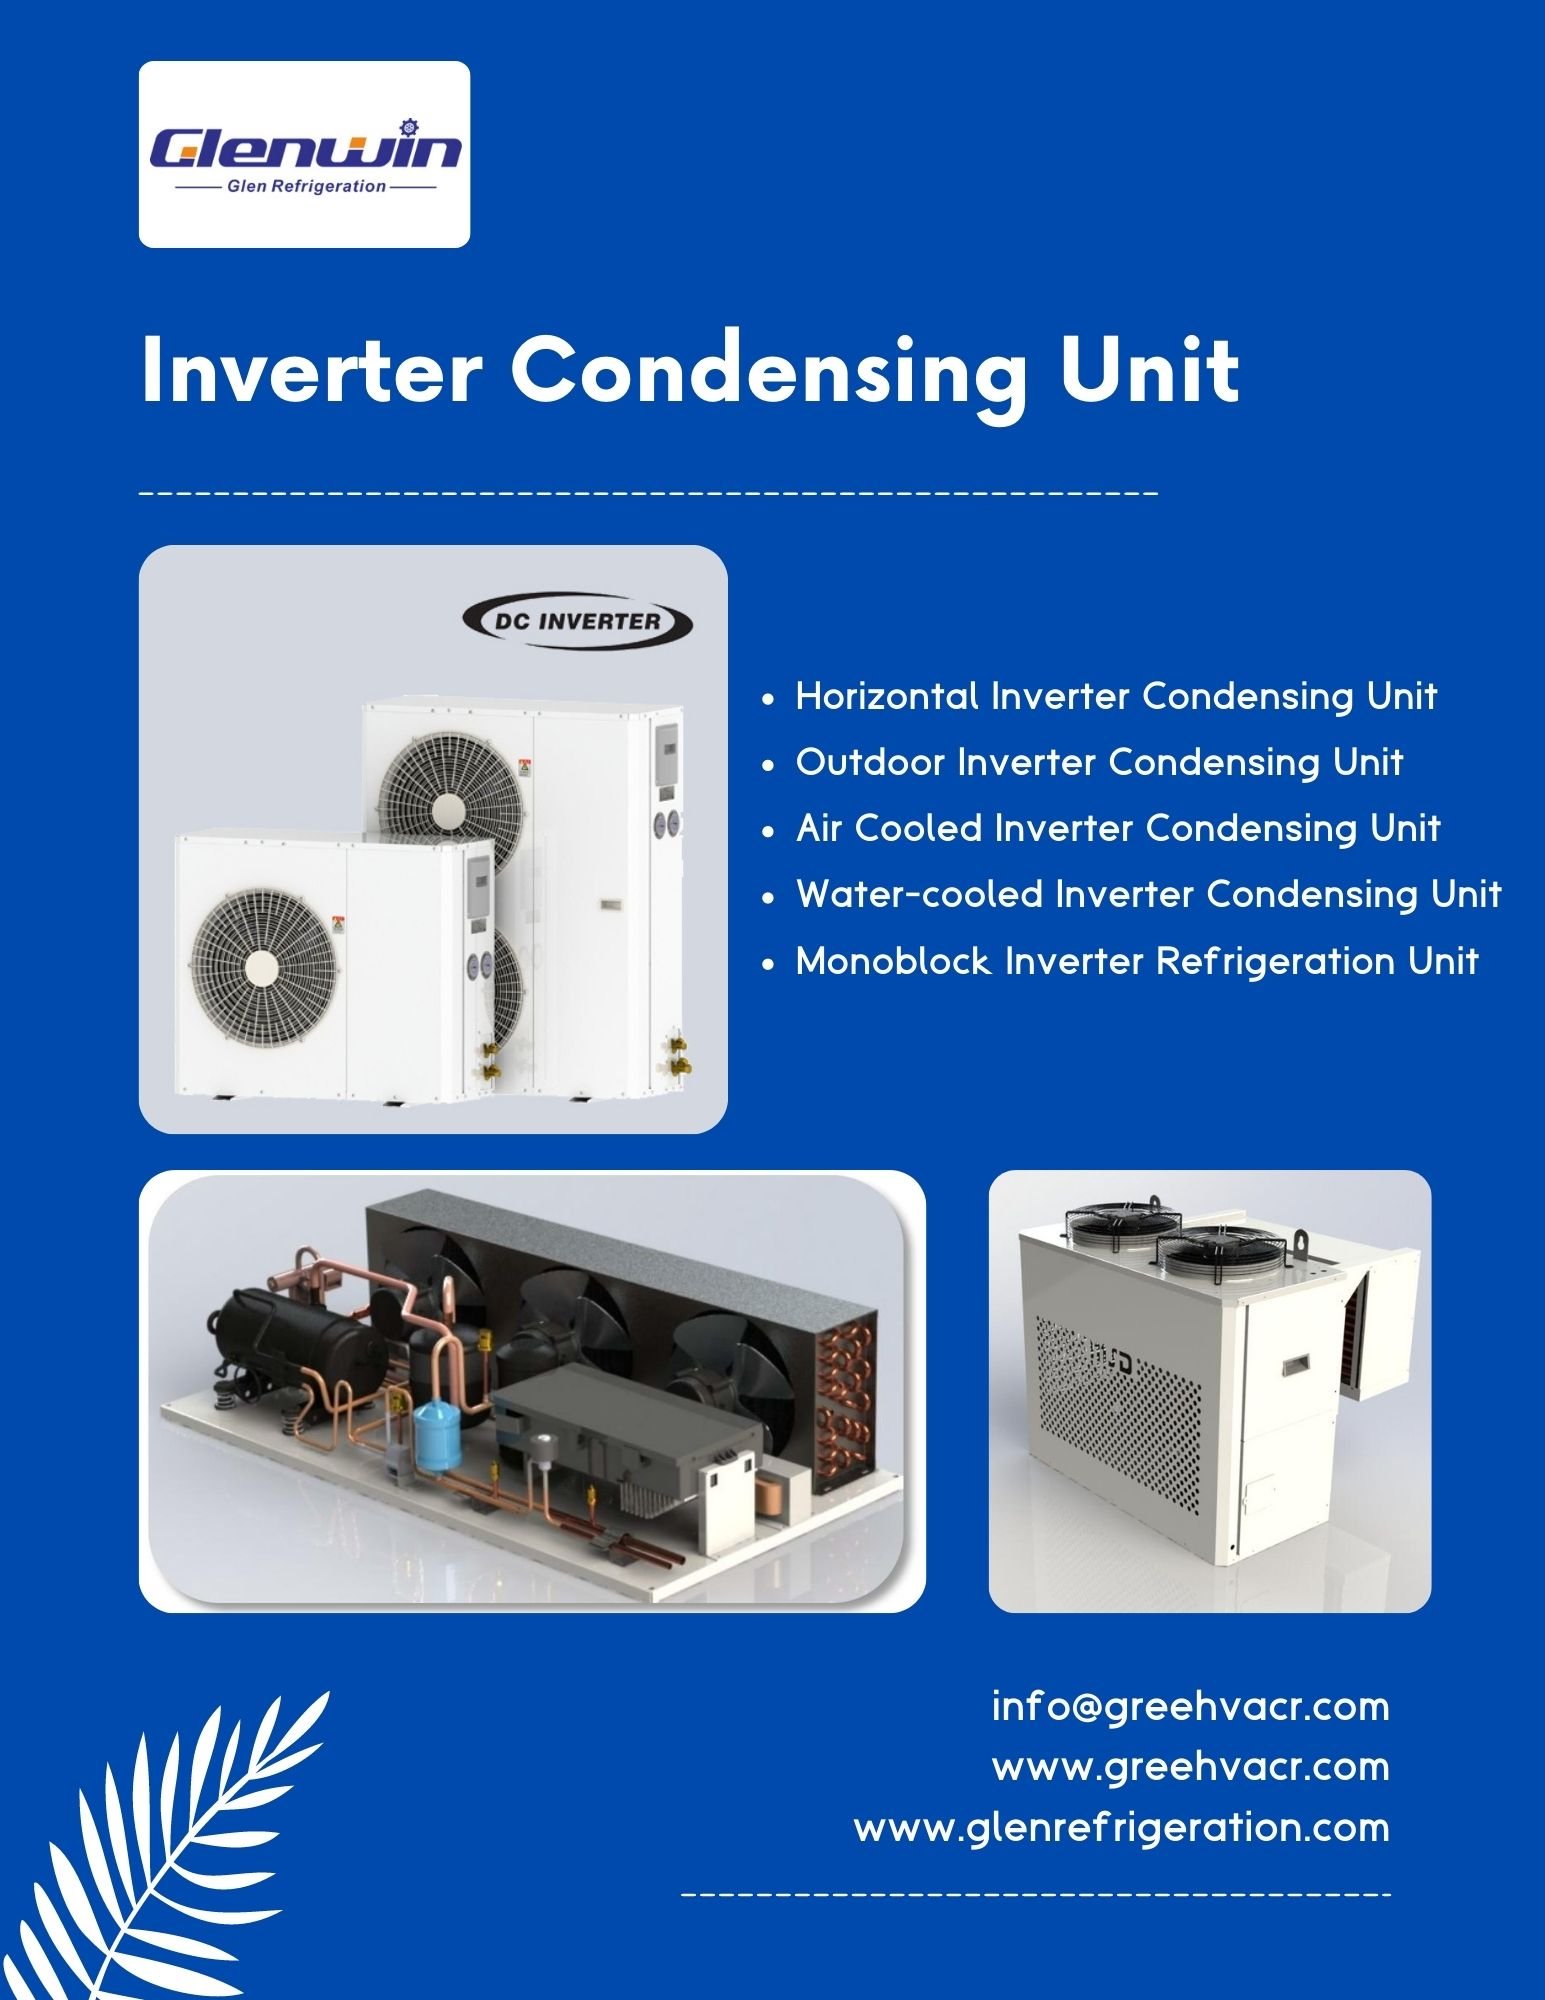 Inverter condensing unit commercial refrigeration condensing unit